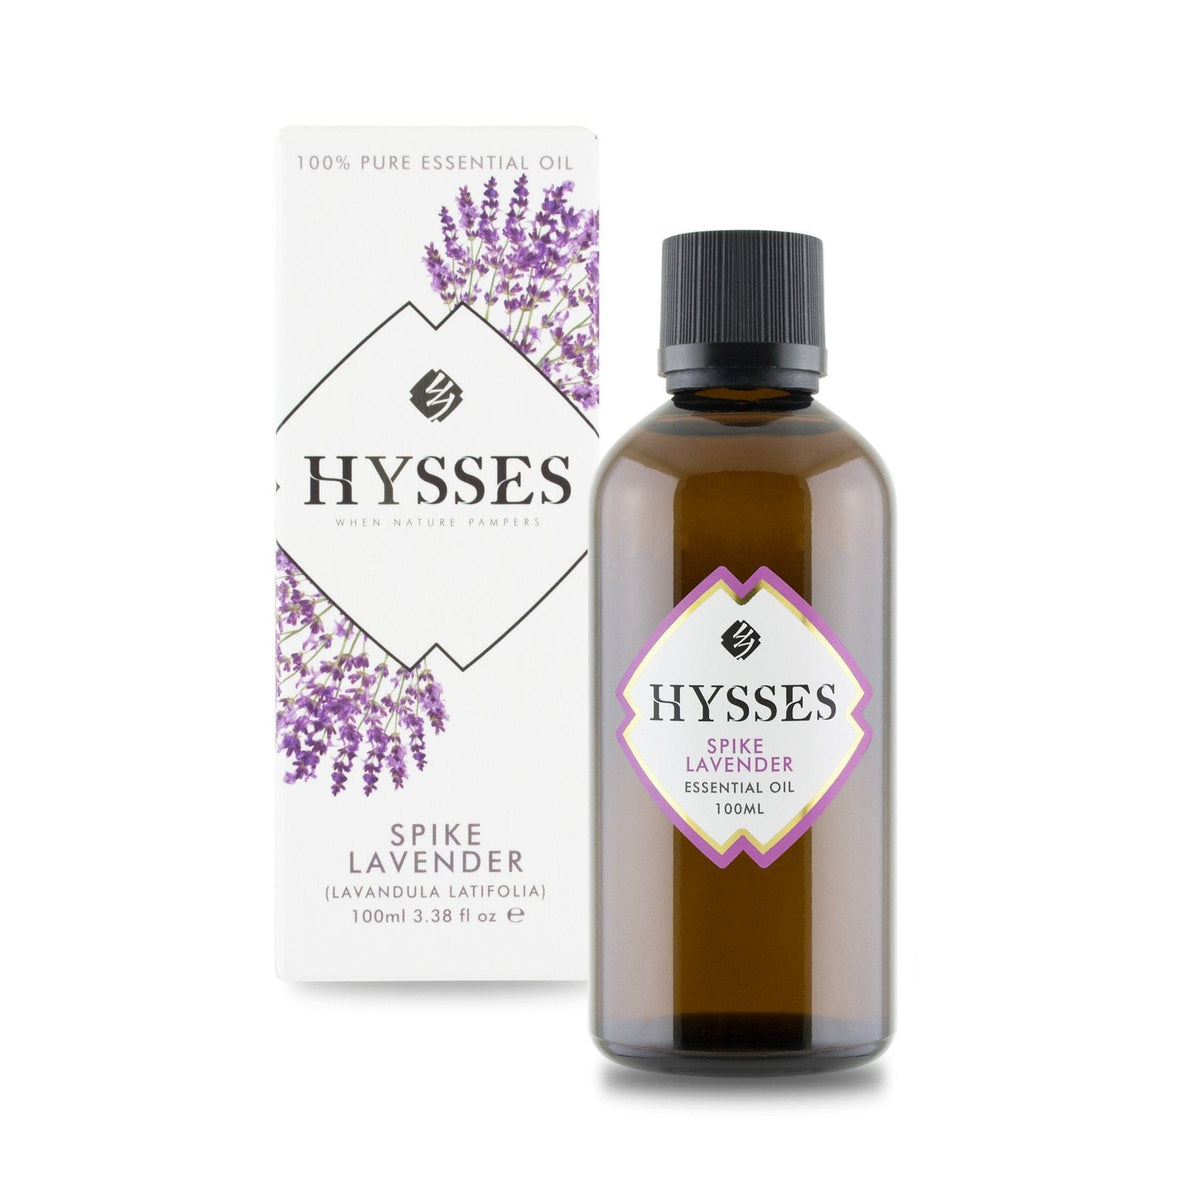 Hysses Essential Oil 100ml Essential Oil Spike Lavender